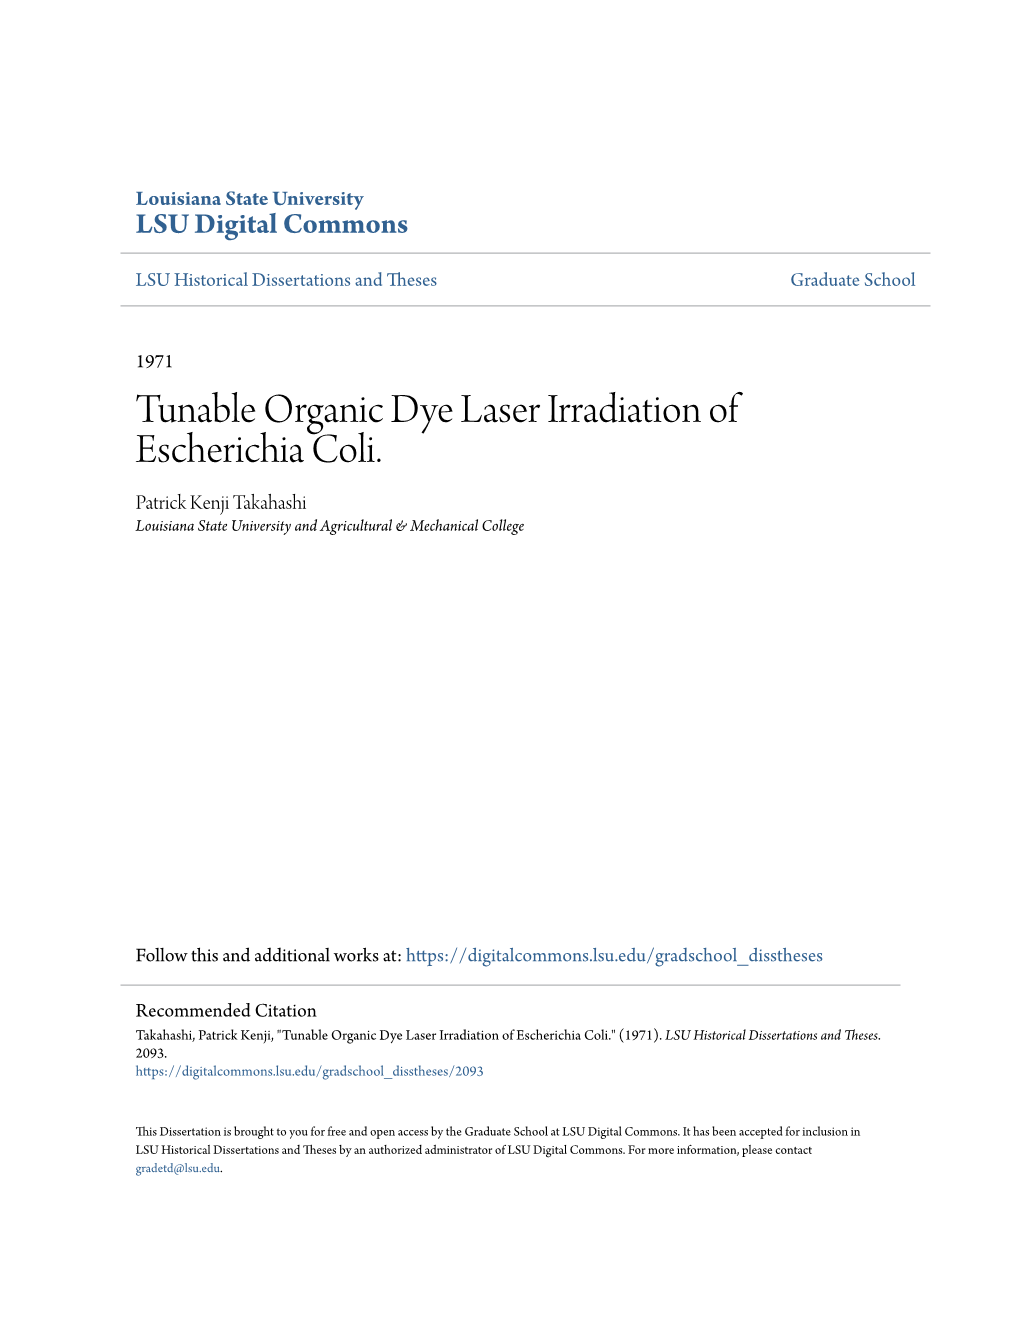 Tunable Organic Dye Laser Irradiation of Escherichia Coli. Patrick Kenji Takahashi Louisiana State University and Agricultural & Mechanical College